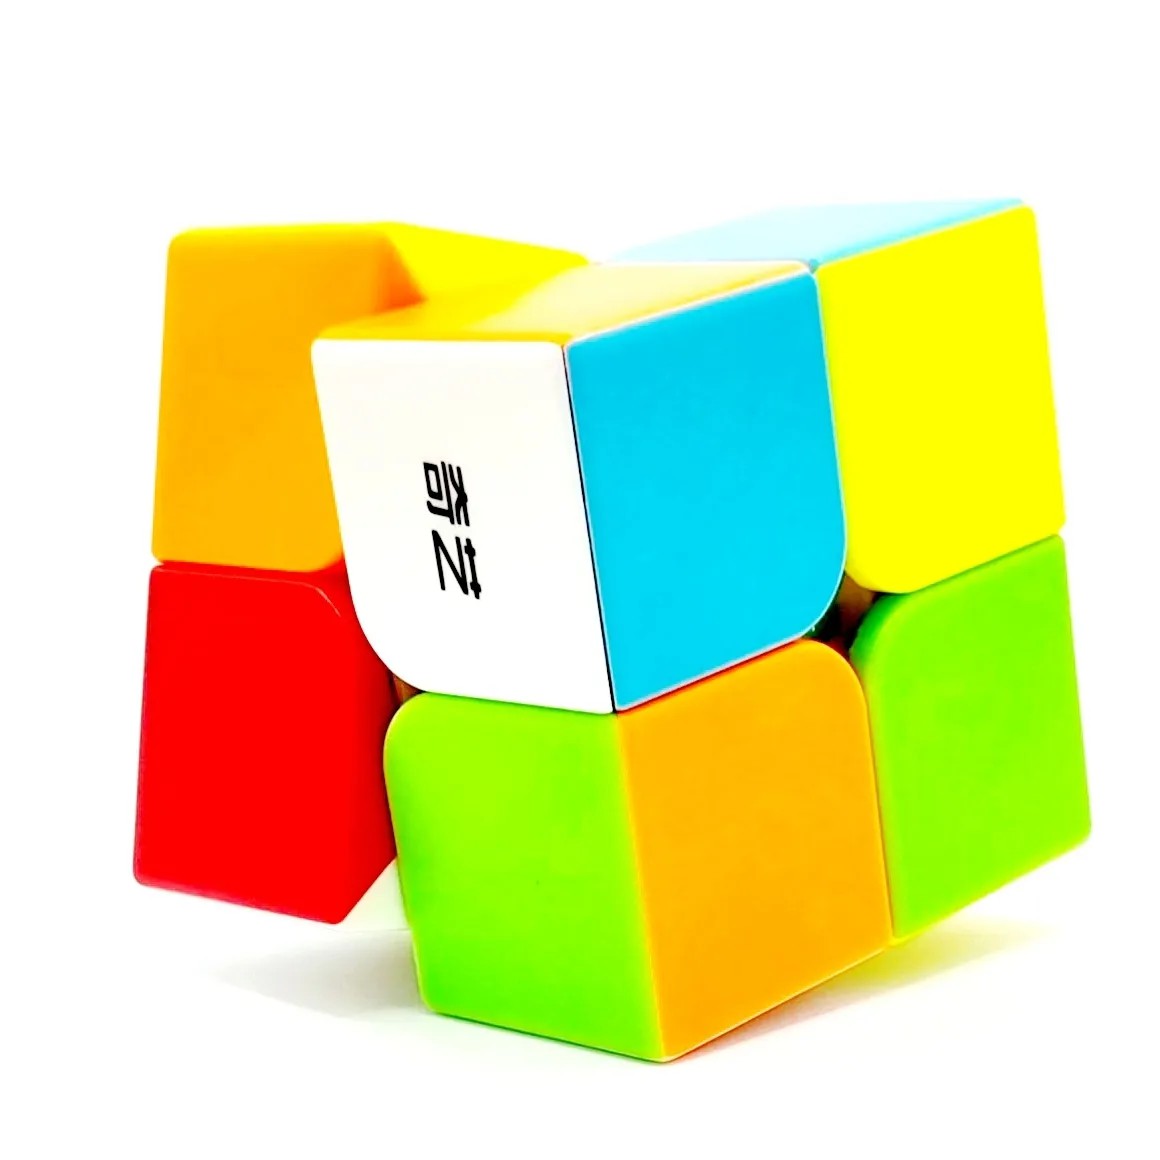 Cubo Mágico 2x2 Profissional Kids Original QiYi QiDi Preto